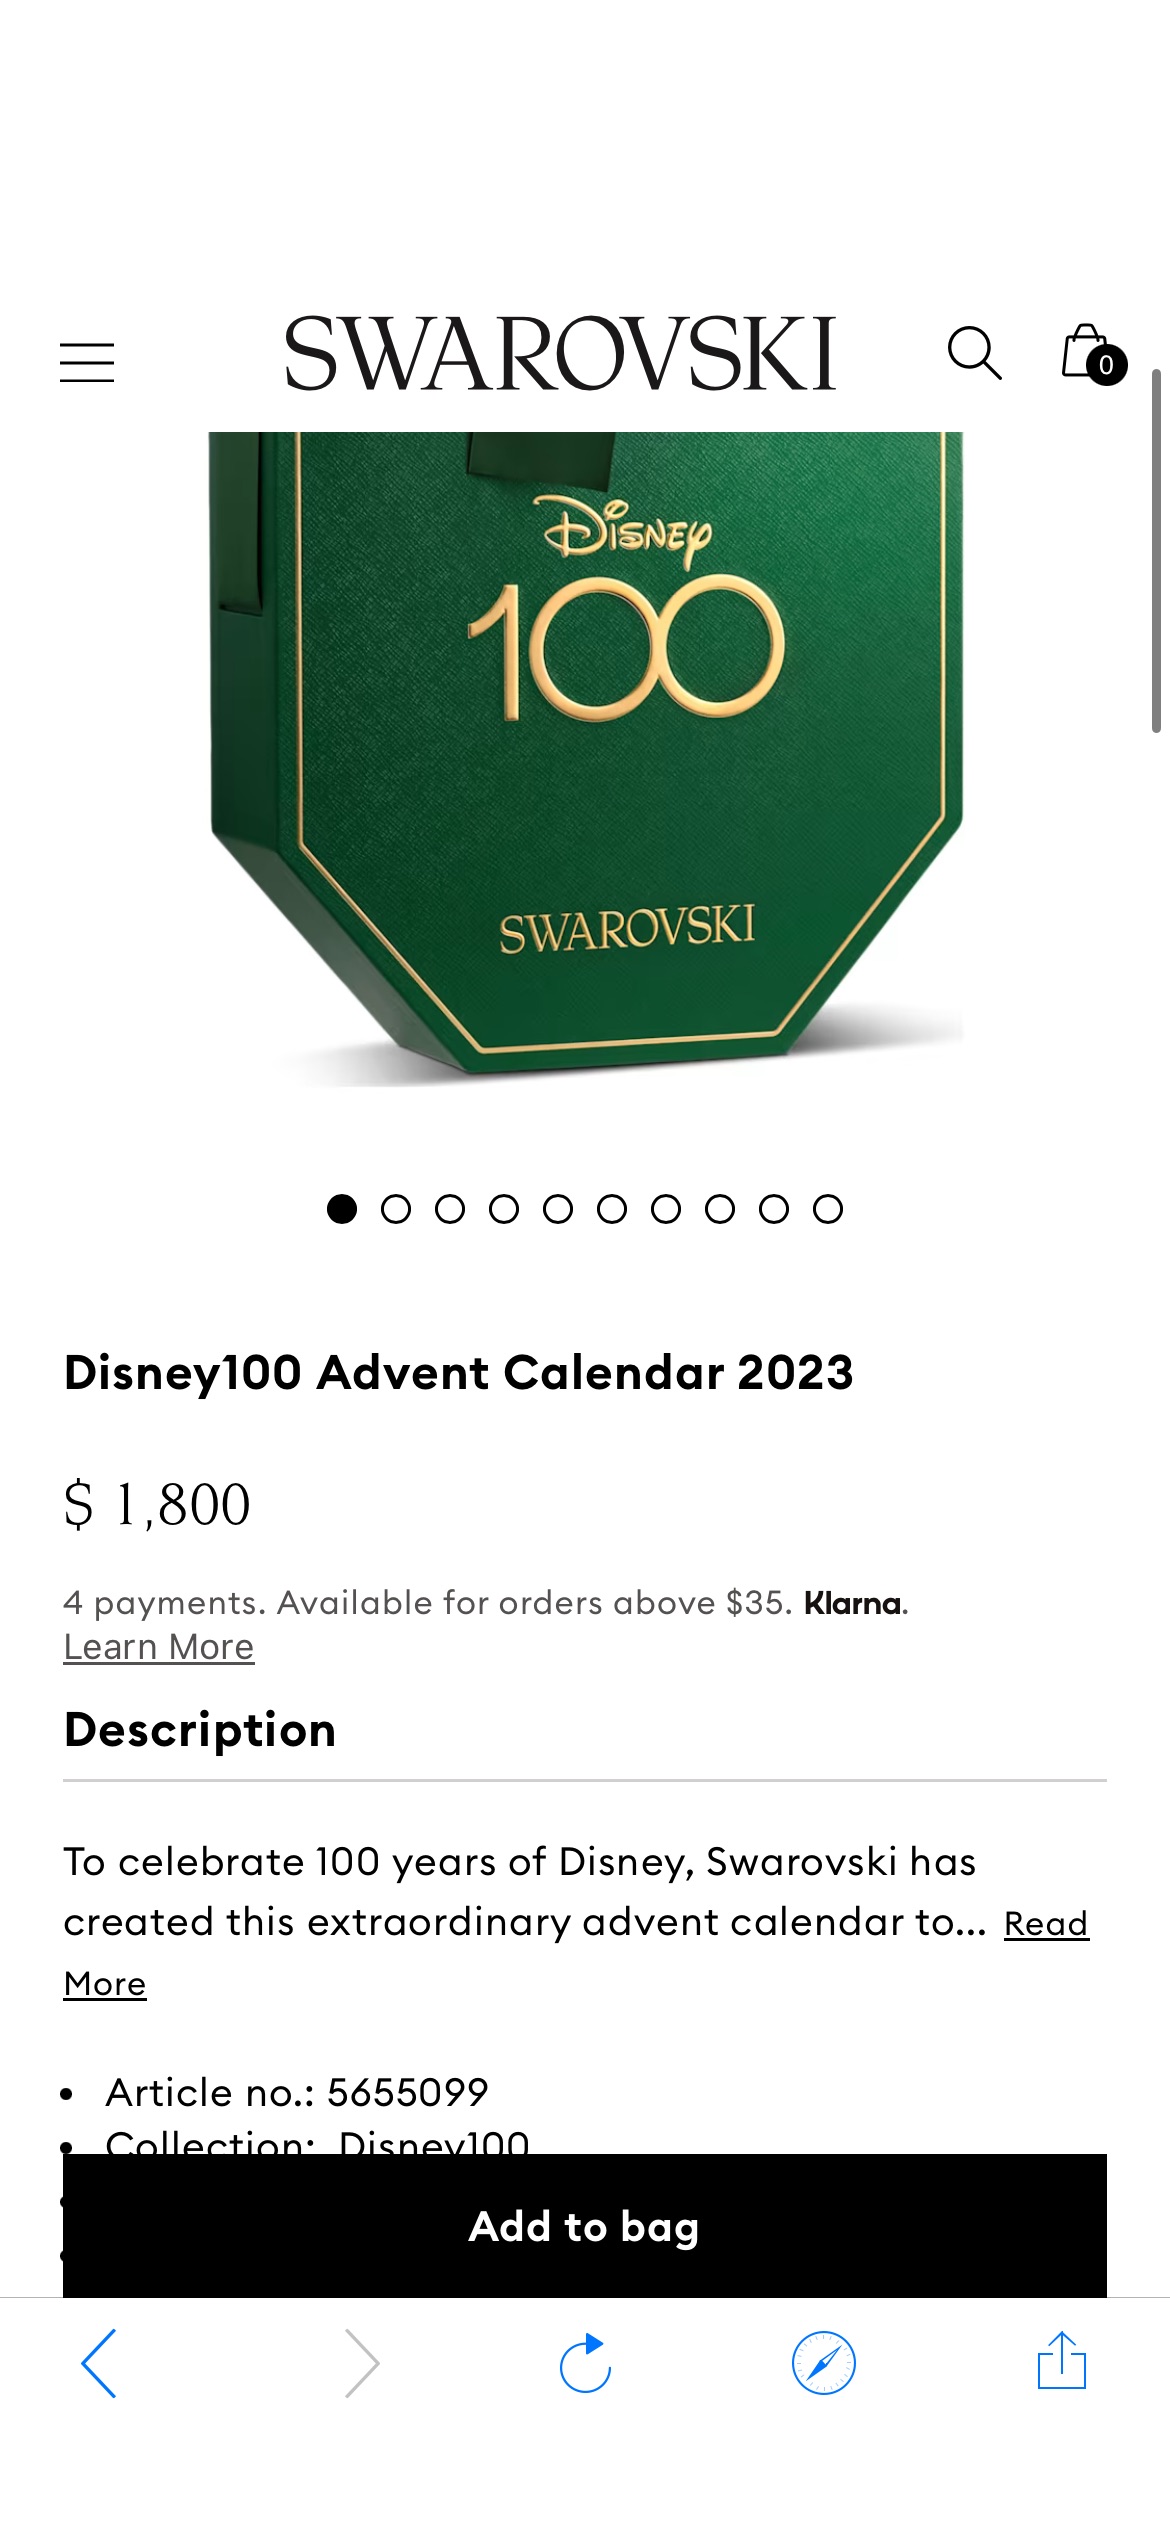 Disney100 Advent Calendar 2023 | Swarovski